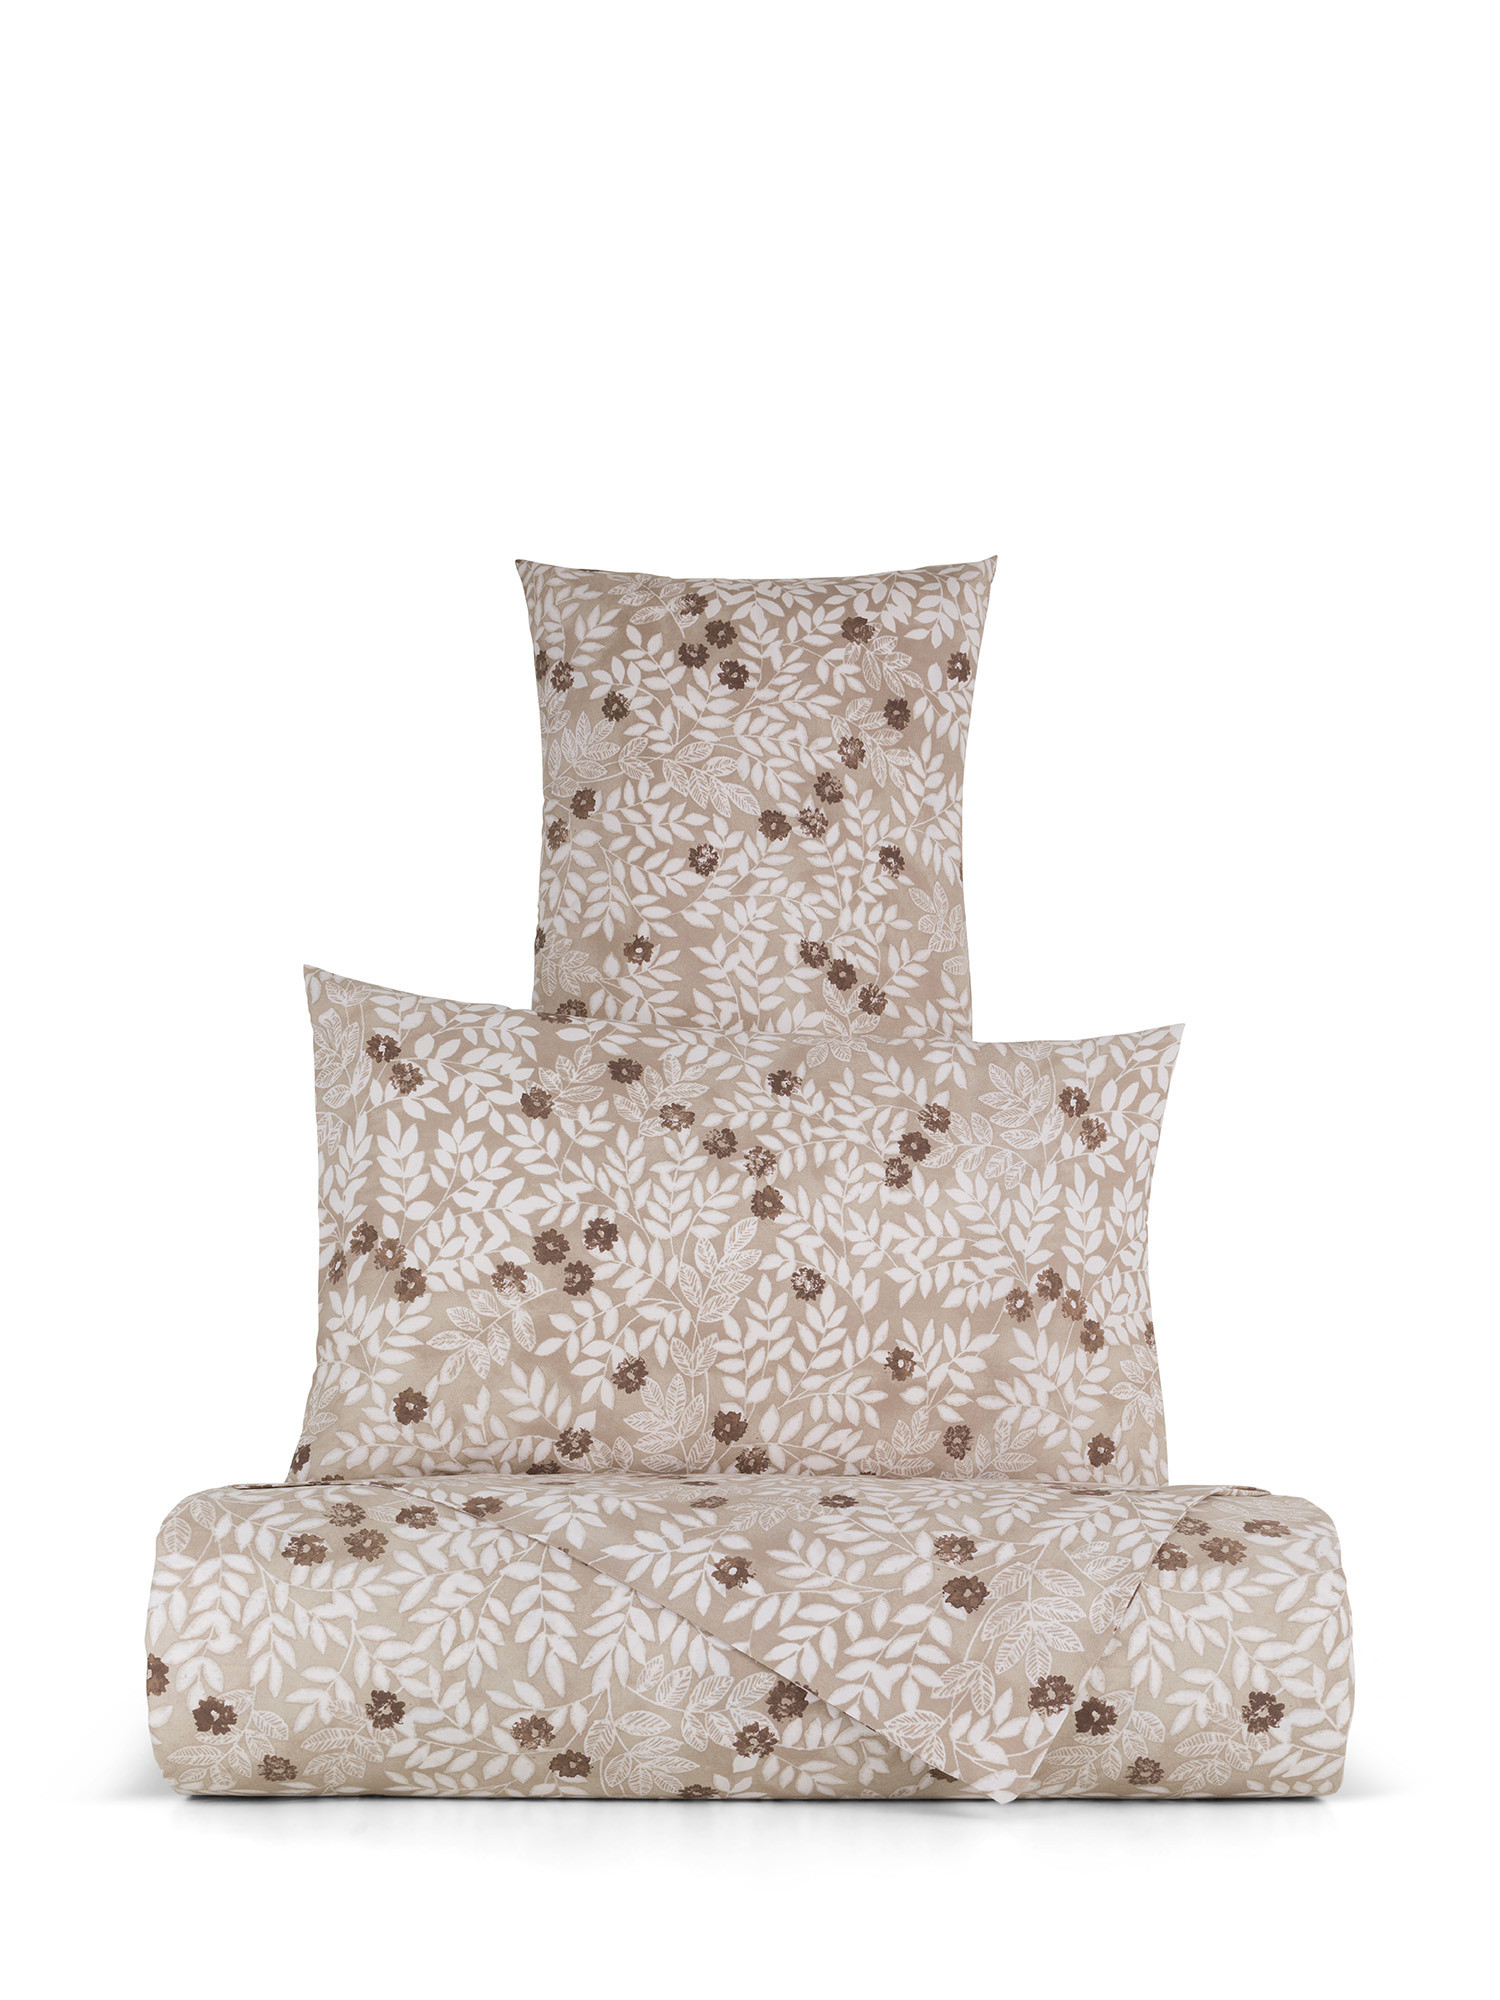 Floral patterned cotton percale duvet cover set, Beige, large image number 0